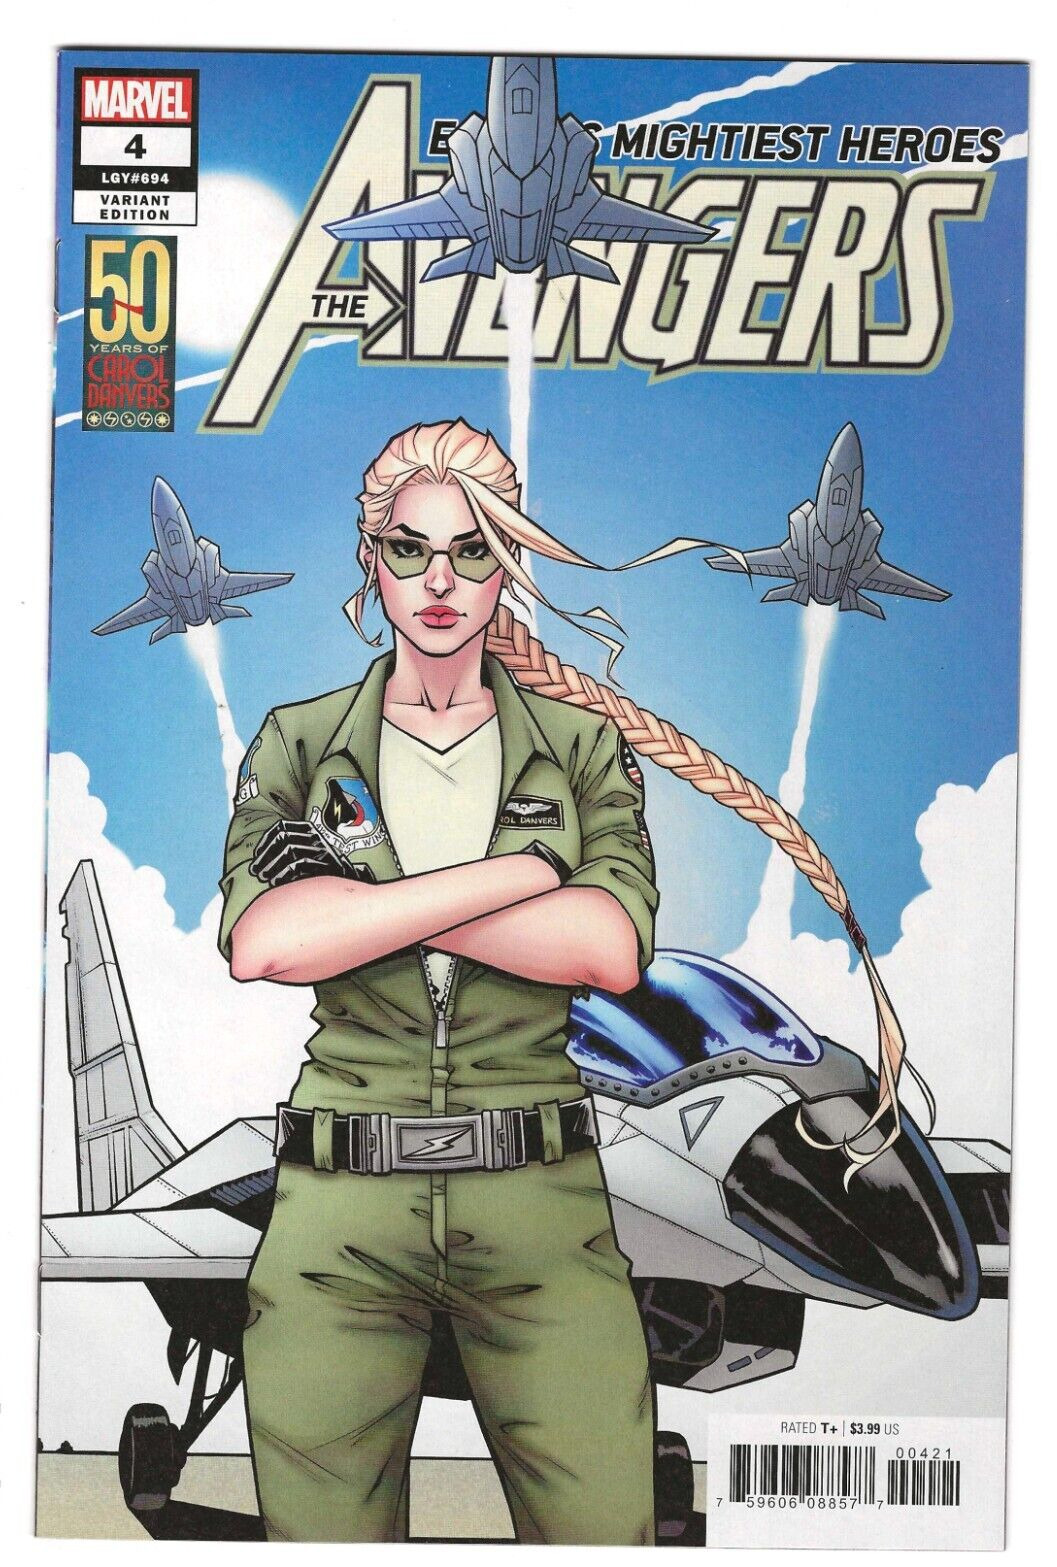 Marvel Comics AVENGERS #4 first print 50 Years of Carol Danvers cover